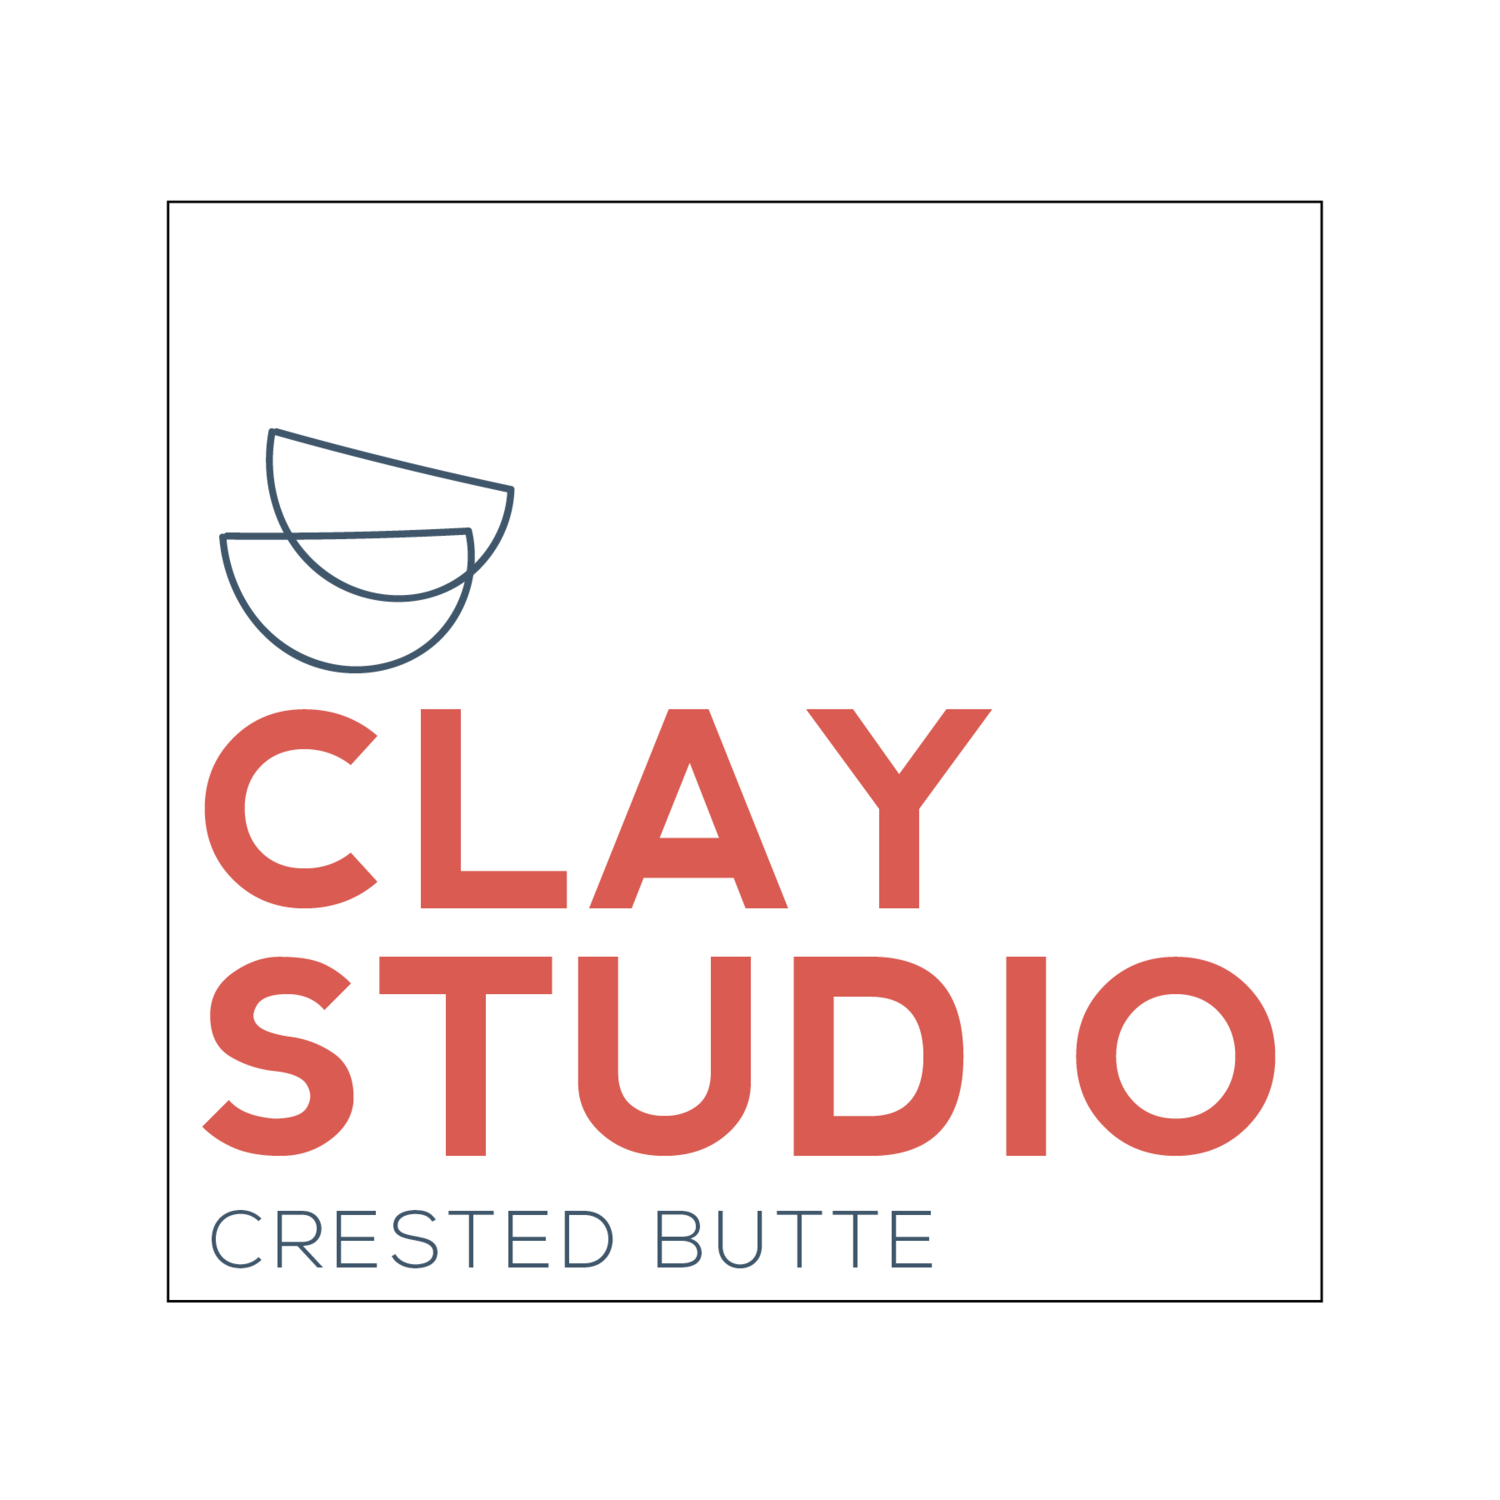 CB Clay Studio